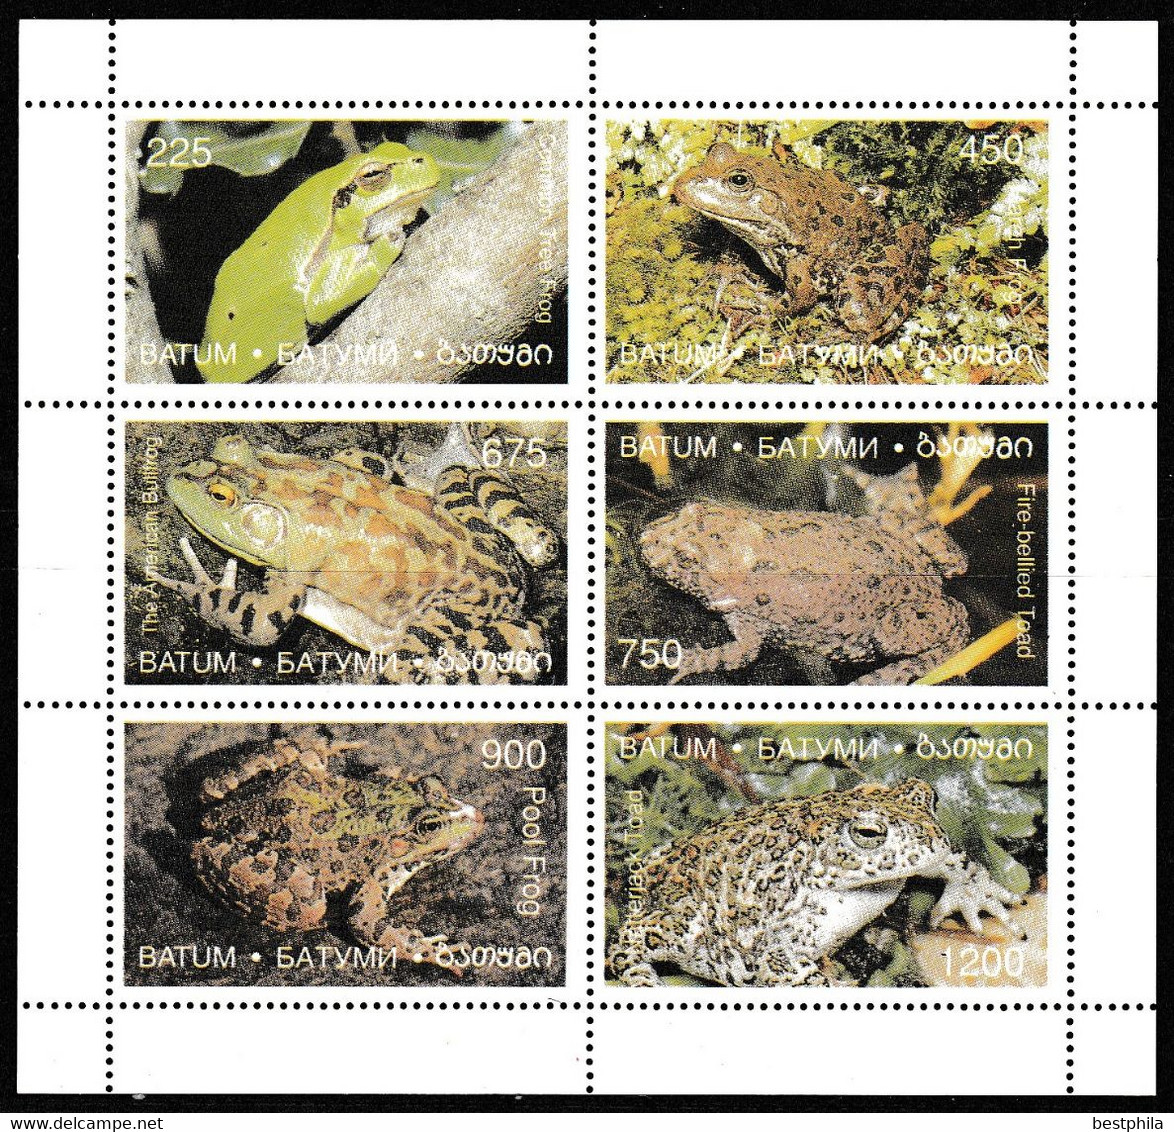 Batum - Land Creatures, Frogs - 1.Mini S/Sheet ** MNH - Georgië